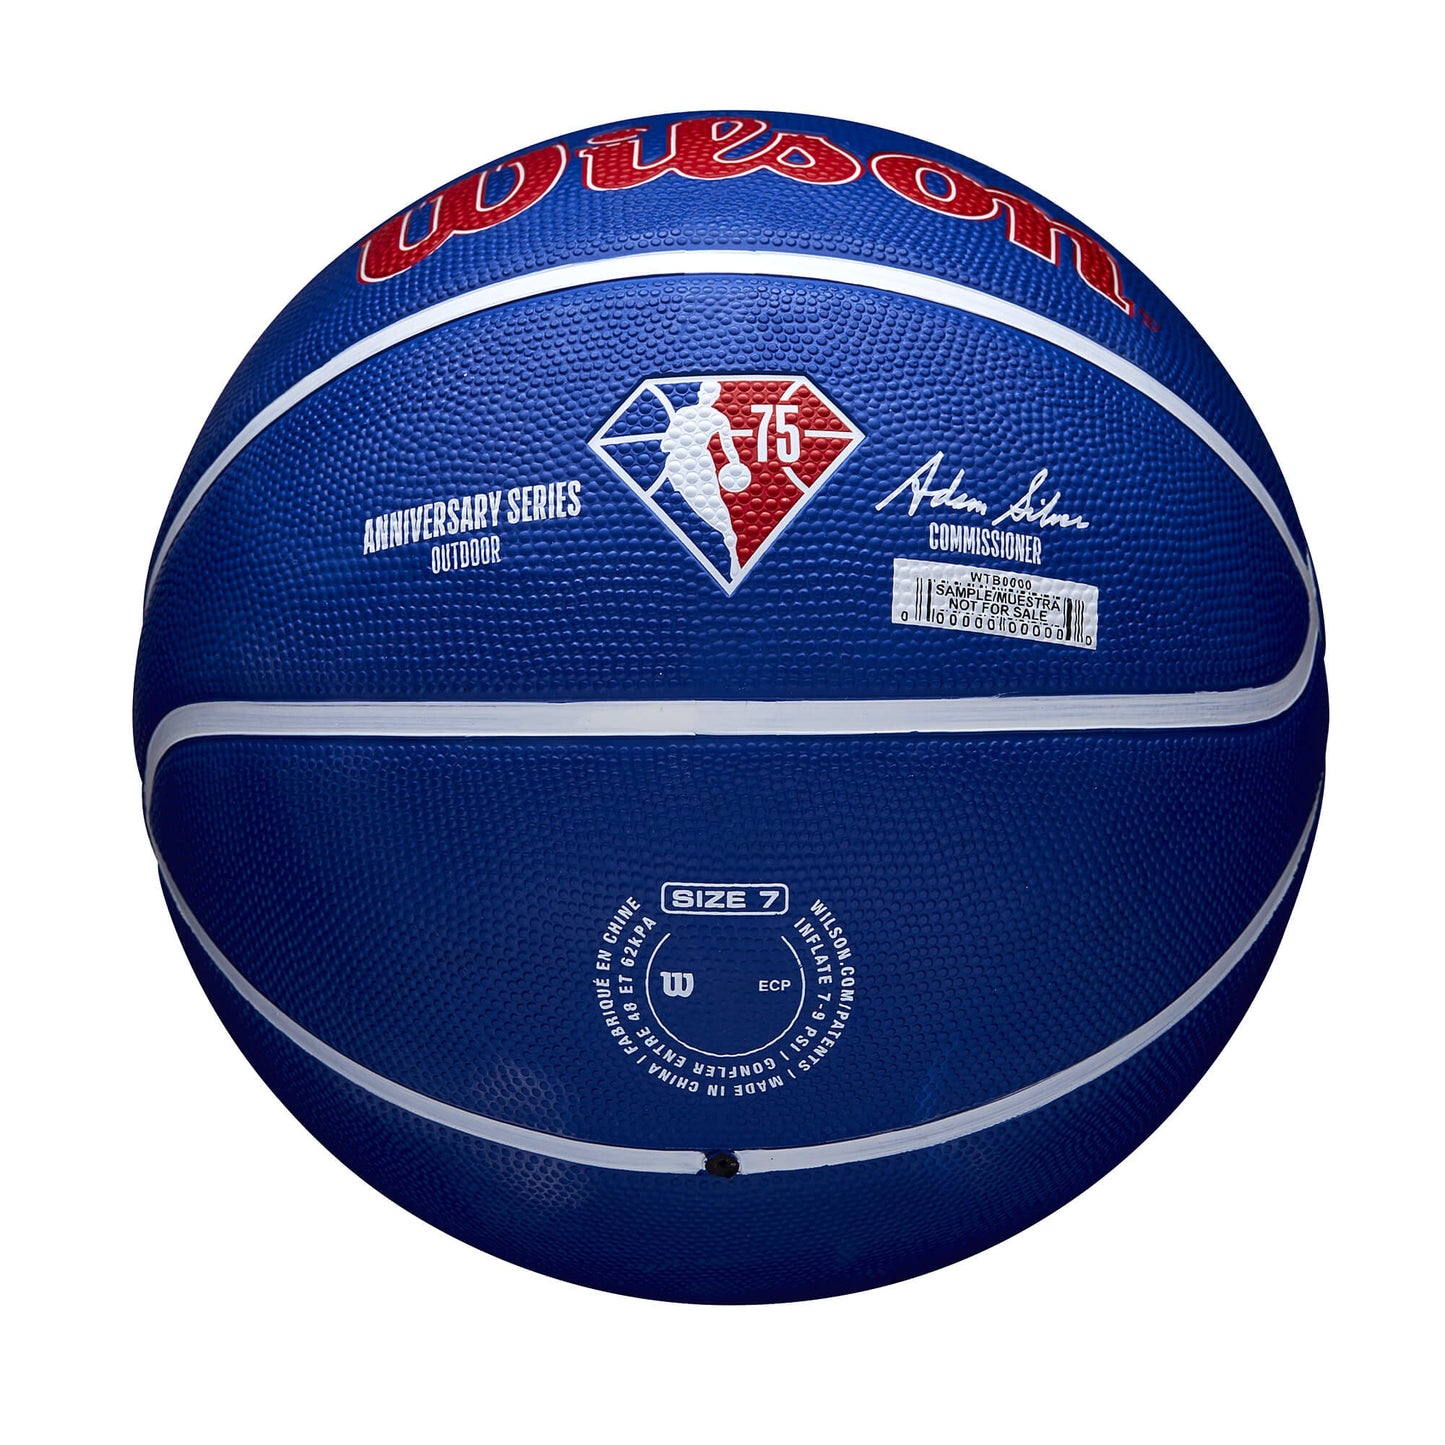 Wilson NBA 75th outdoor Blue (Sz. 7)